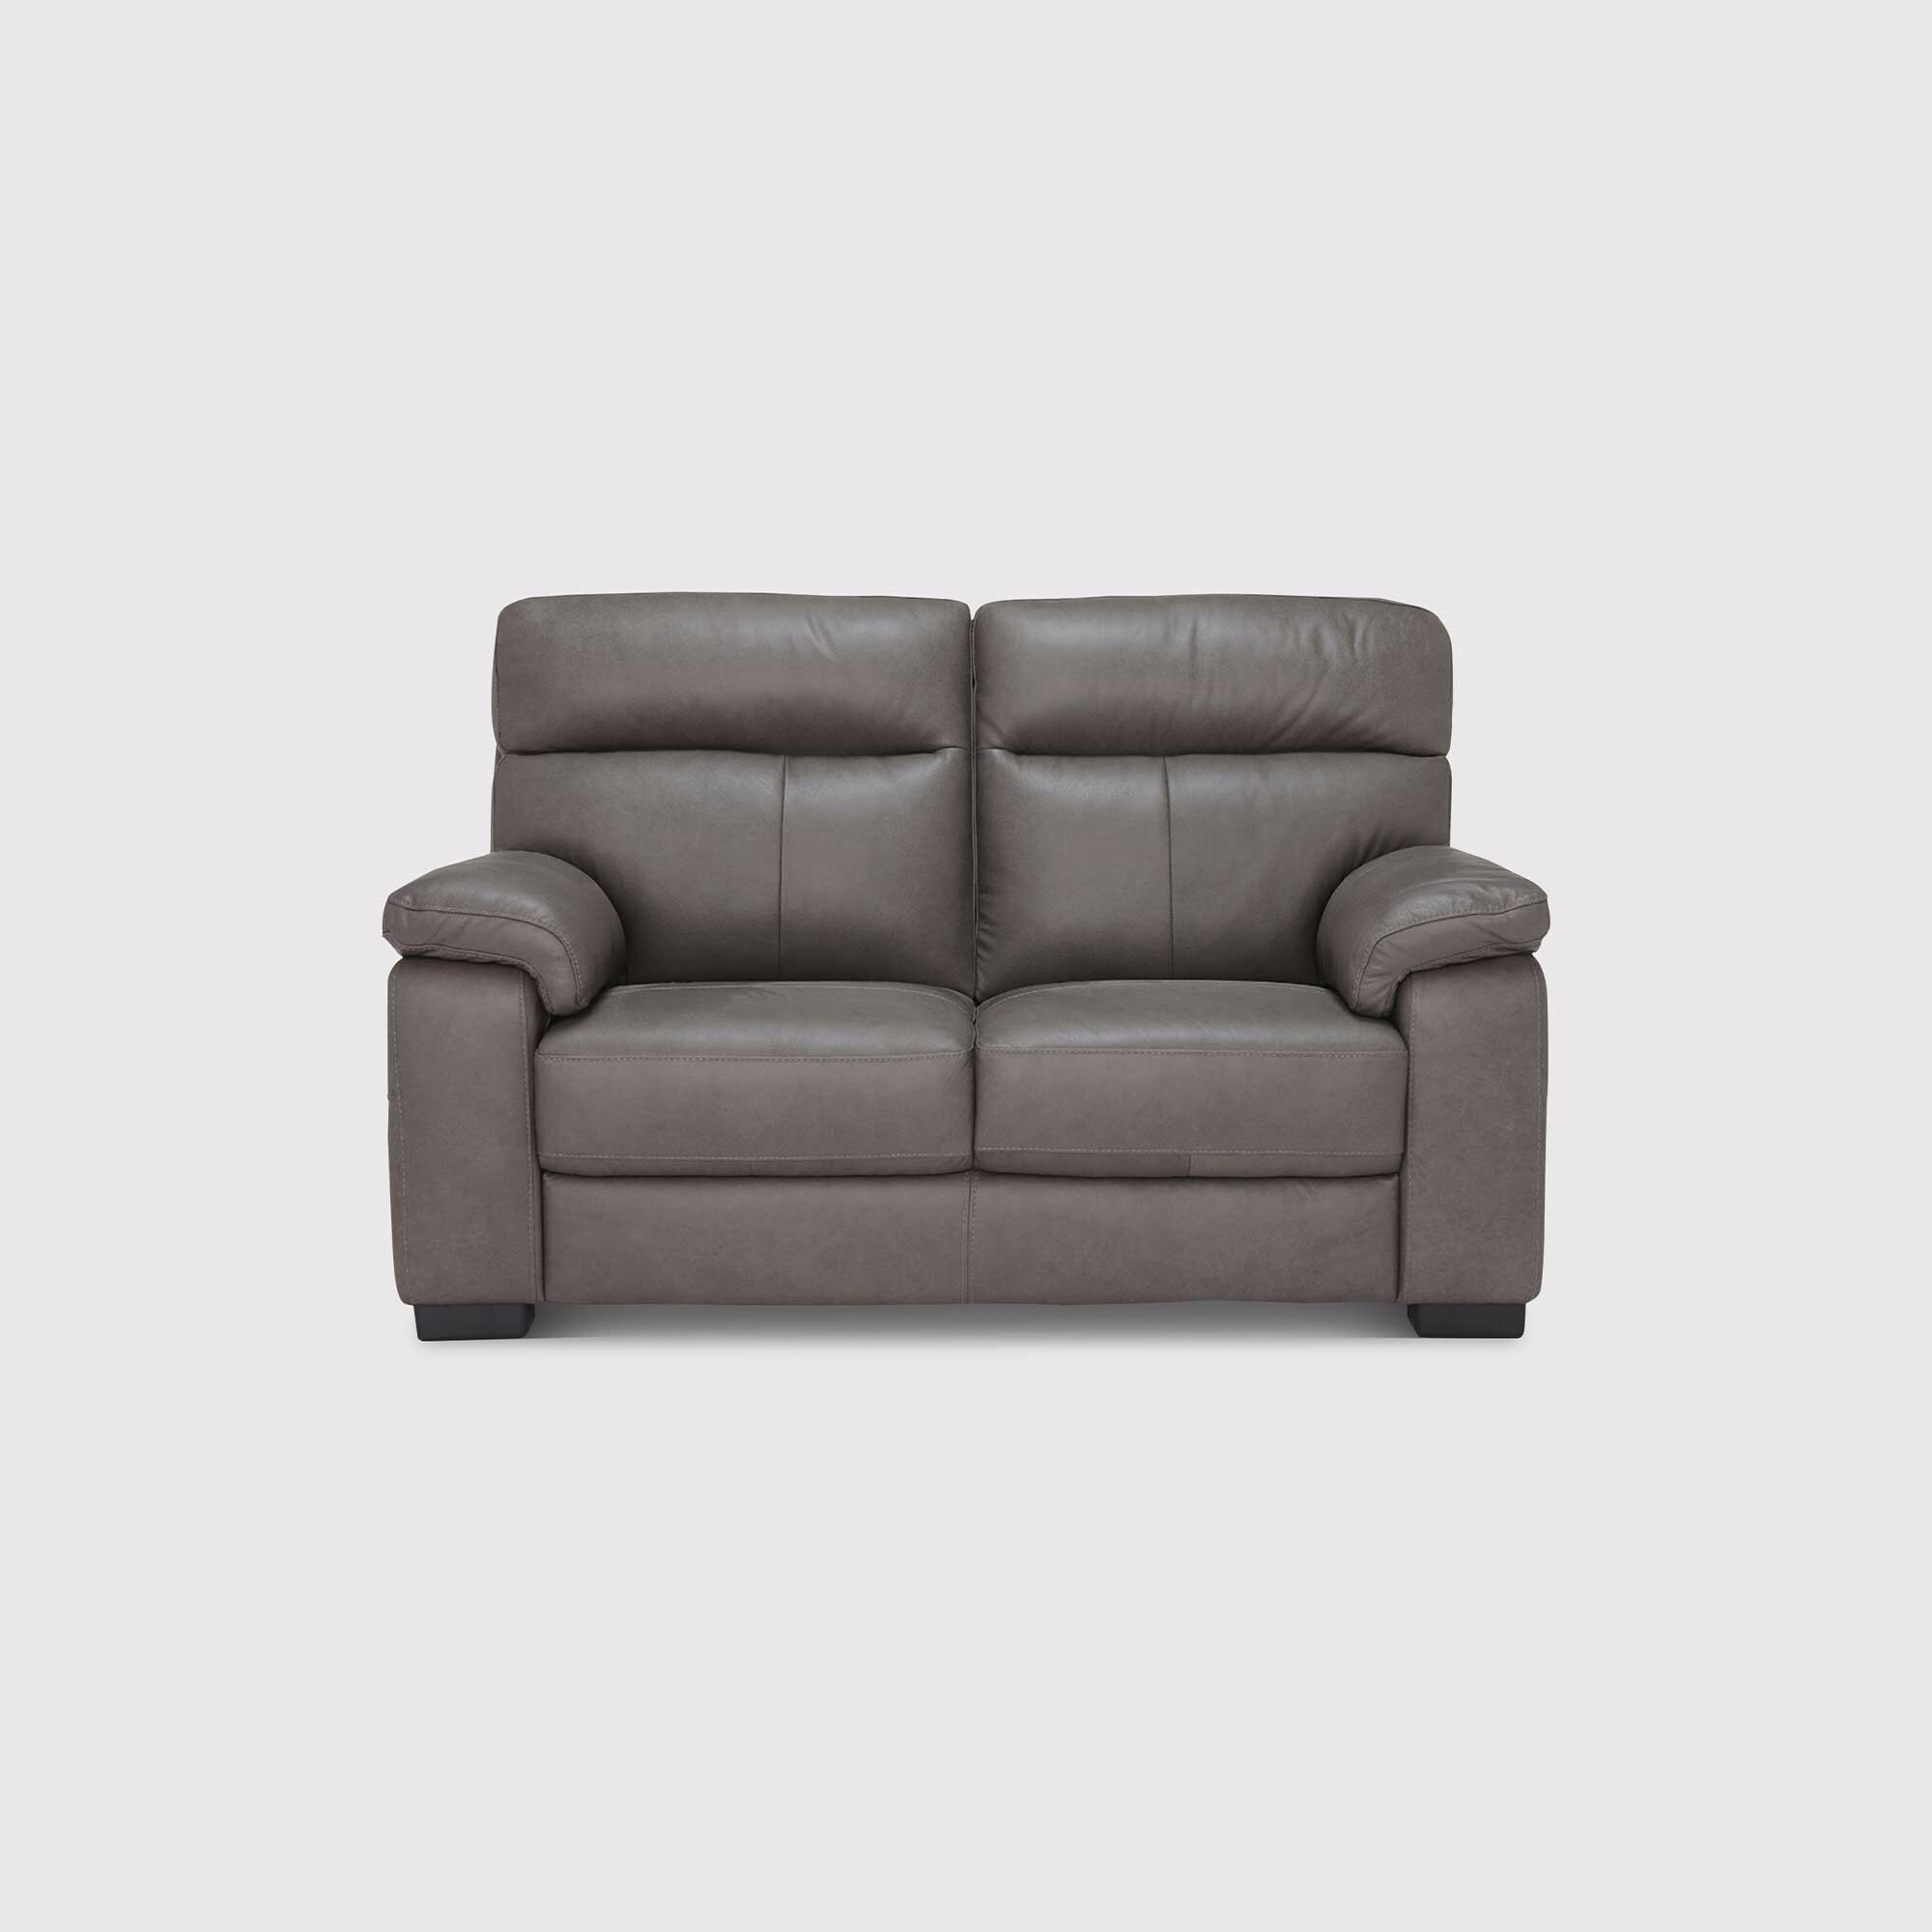 Clark 2 Seater Sofa, Grey Leather | Barker & Stonehouse